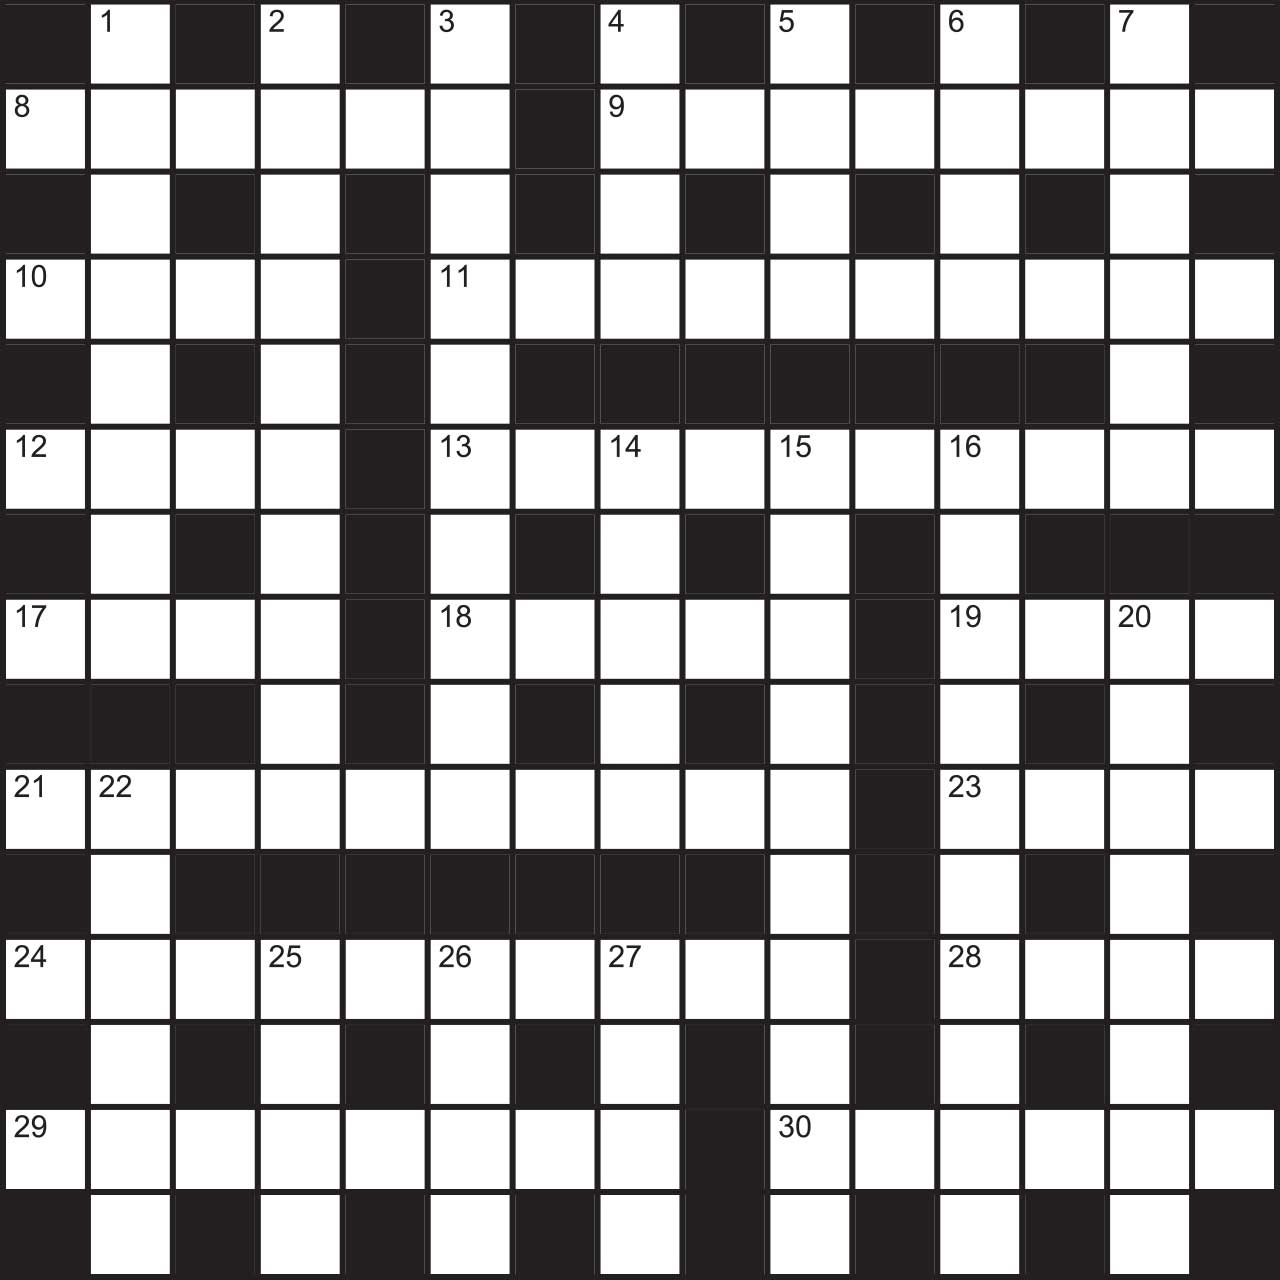 image of crossword puzzle